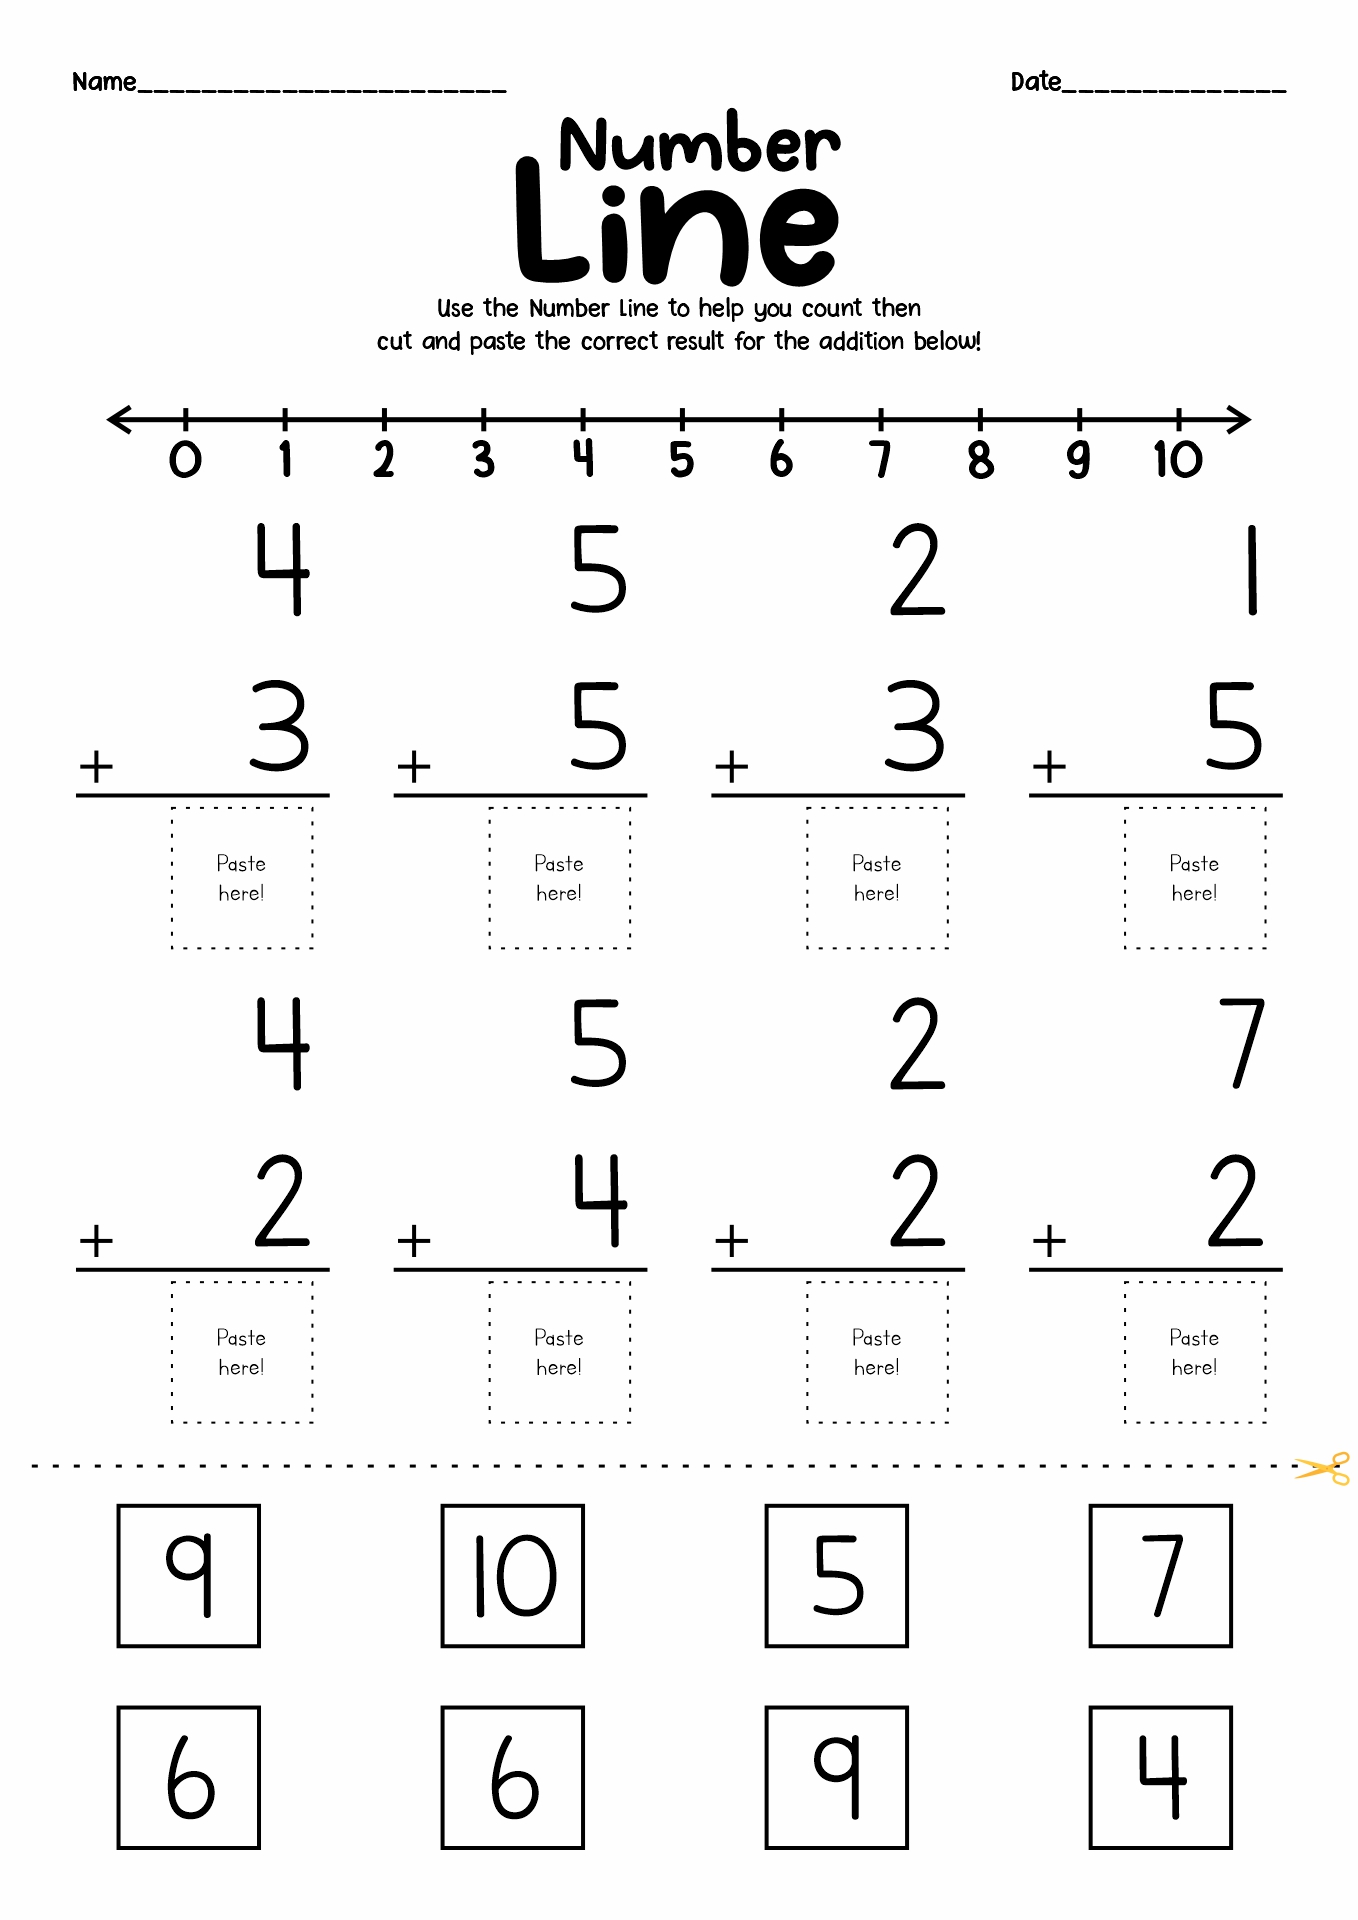 Cut and Paste Number Line Worksheet Image